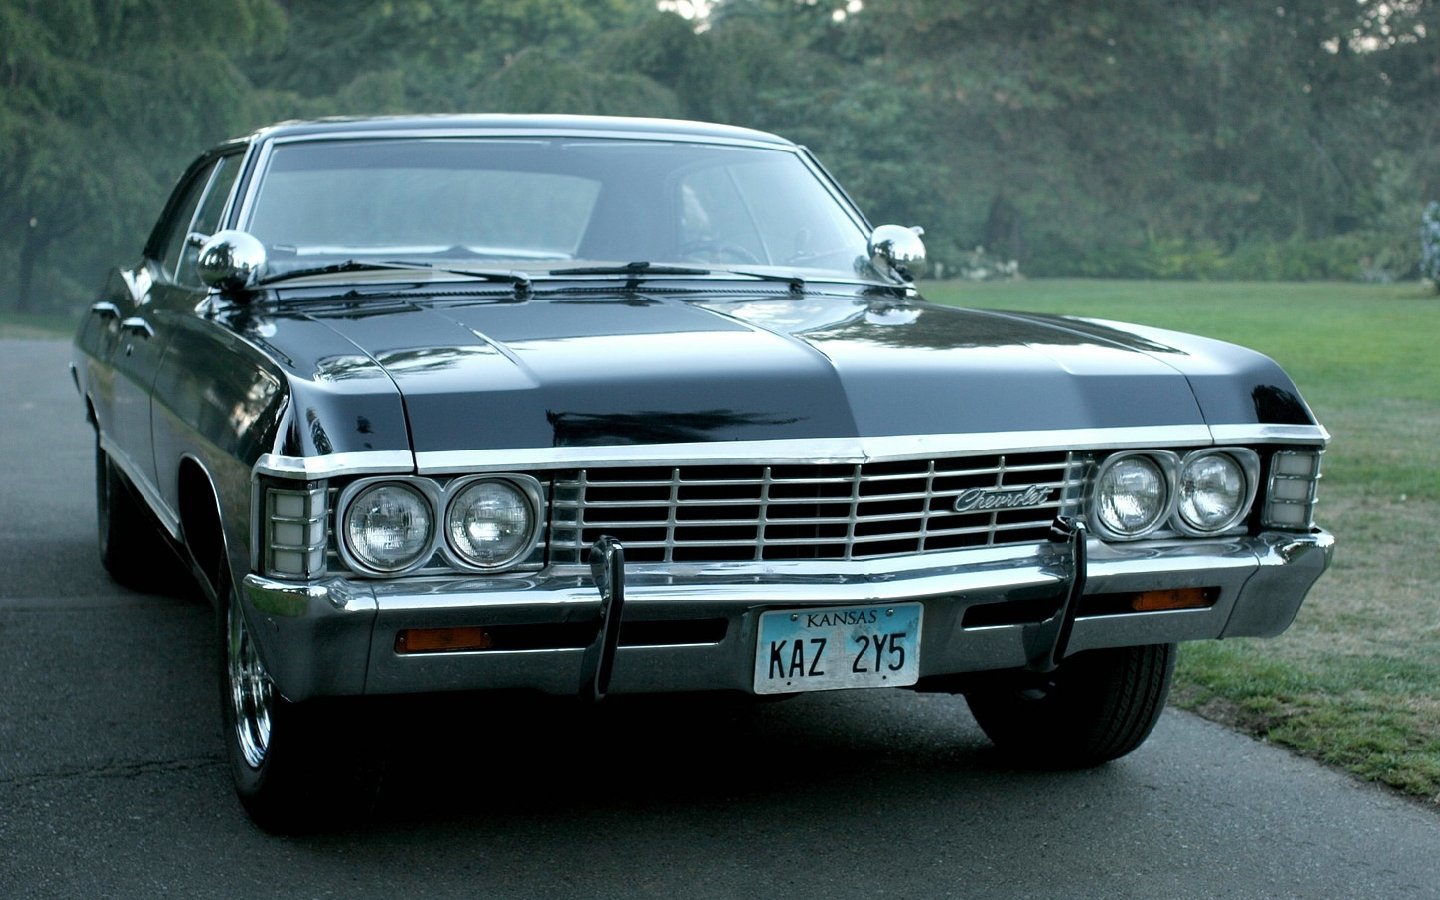 Chevrolet impala год. Шевроле Импала 1967. Шевроле Импала 1967 хардтоп седан. Chevrolet Impala 1967 седан хардтоп. Шеви Импала 1967.